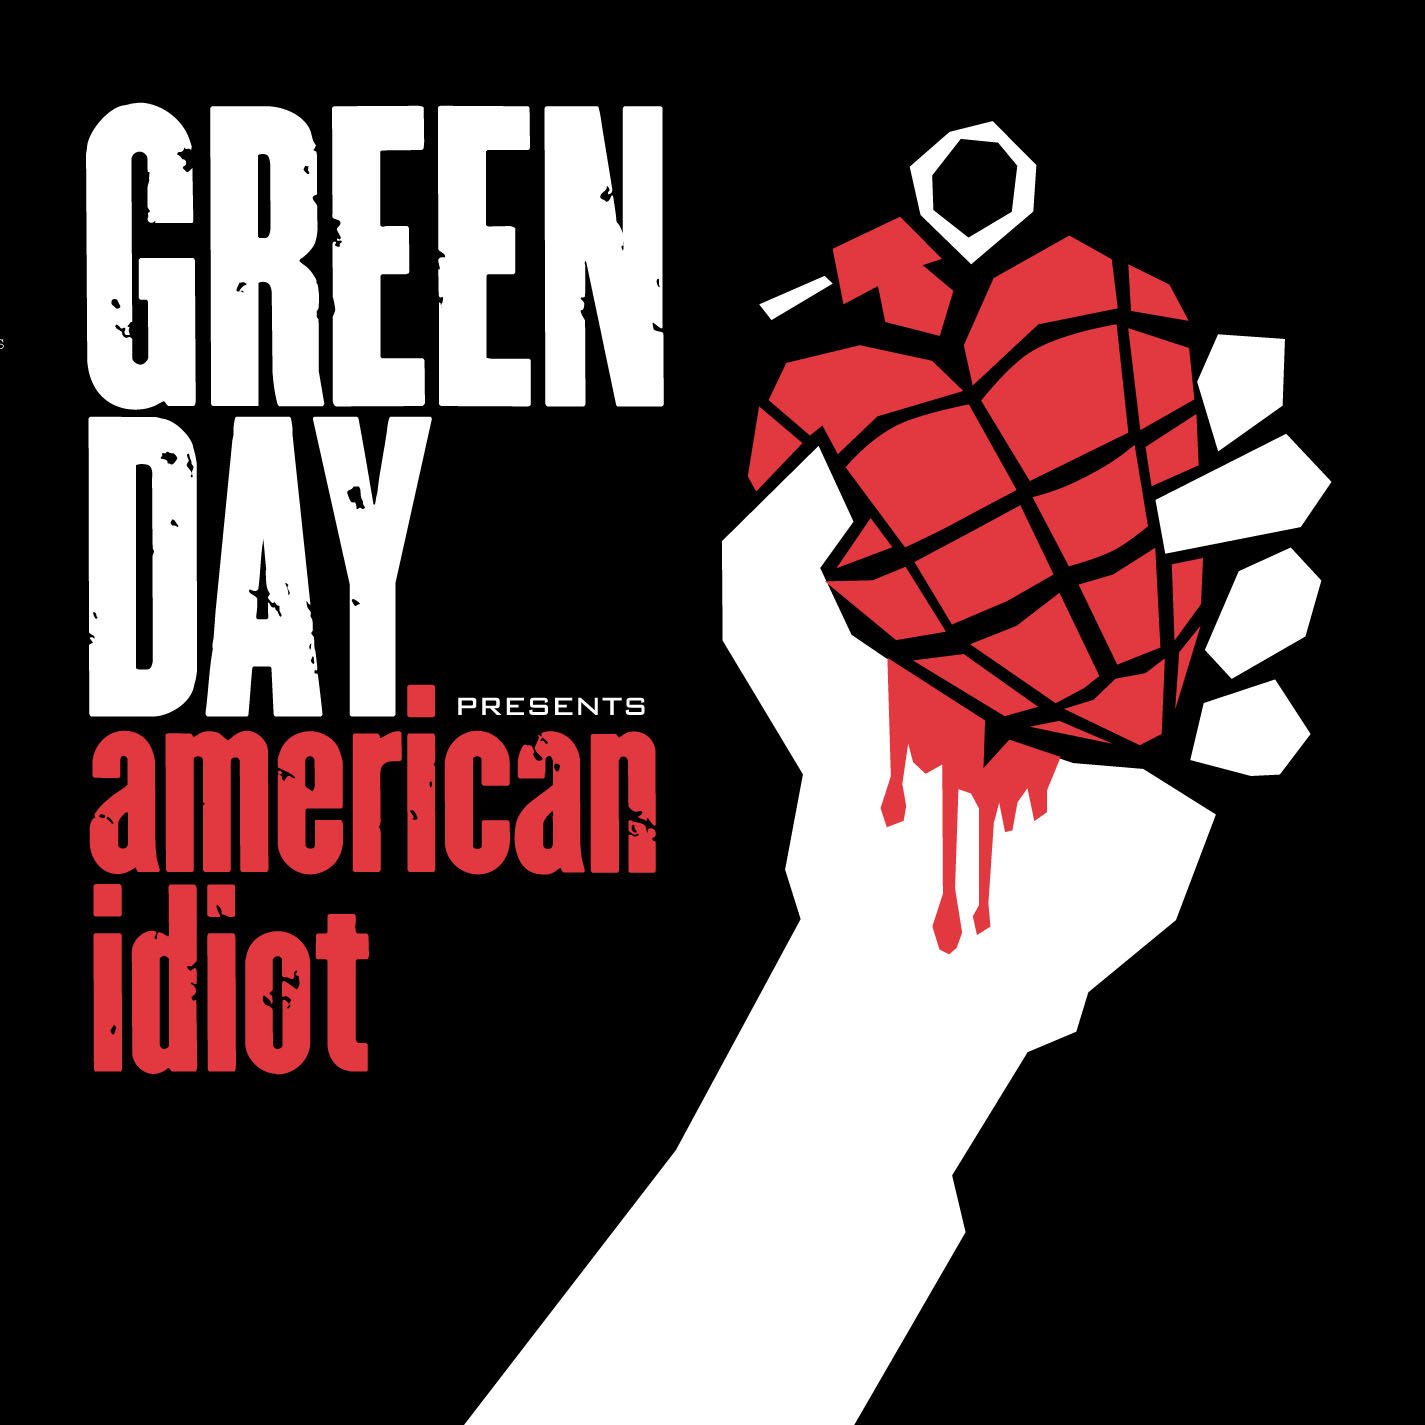 Green Day "American Idiot" CD